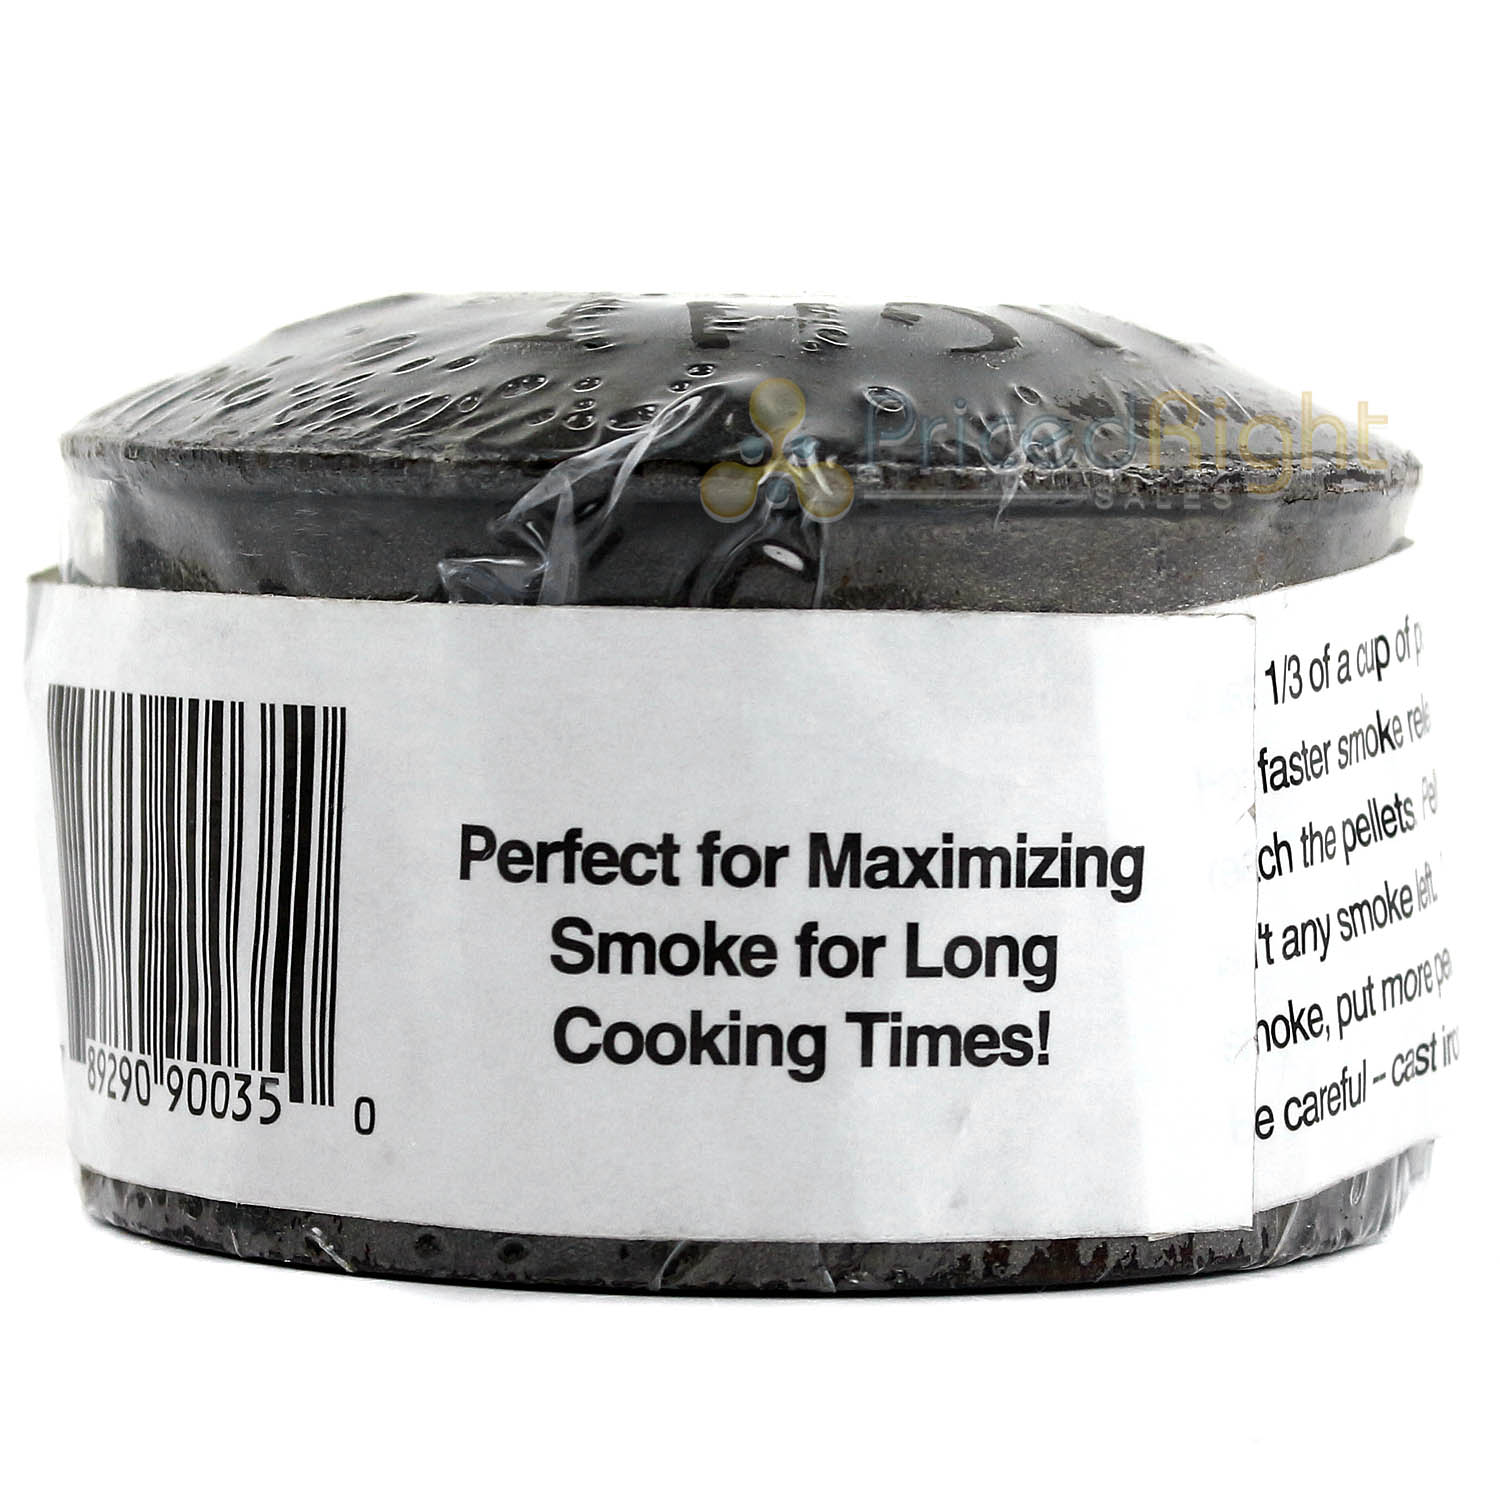 BBQr's Delight Cast Iron Smoker Pot Wood Pellet Smoke BBQ with 1lb Apple Blend